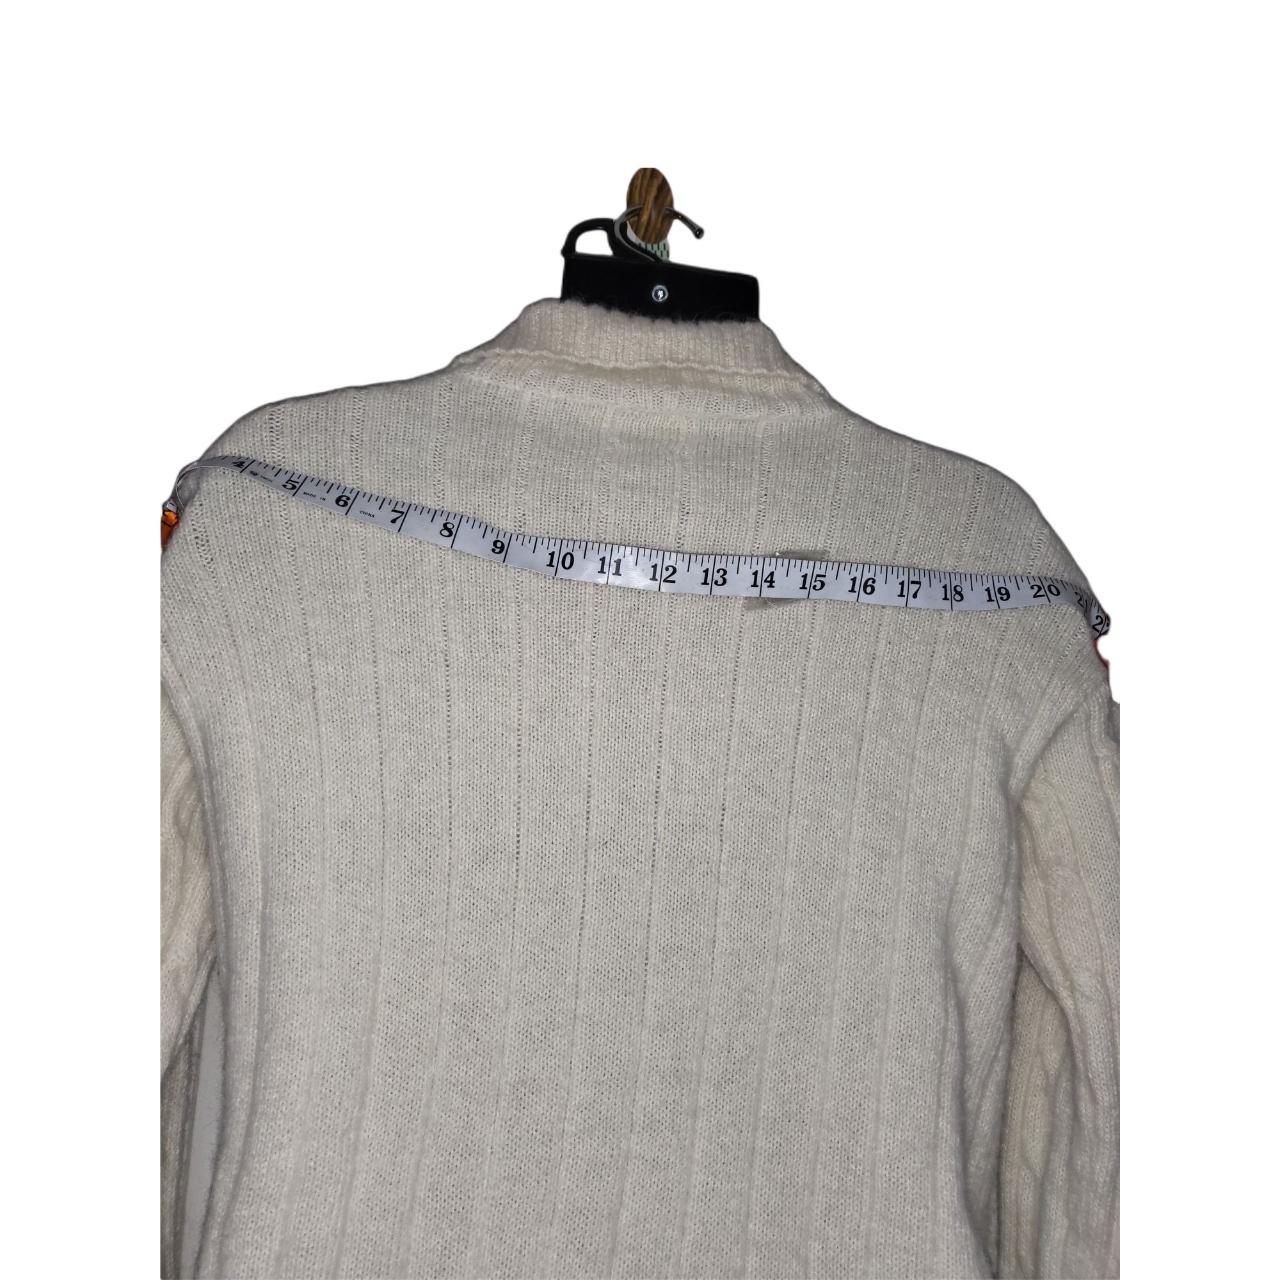 Inca Fashions Alpaca 5 Button Sz M Cardigan Sweater... - Depop